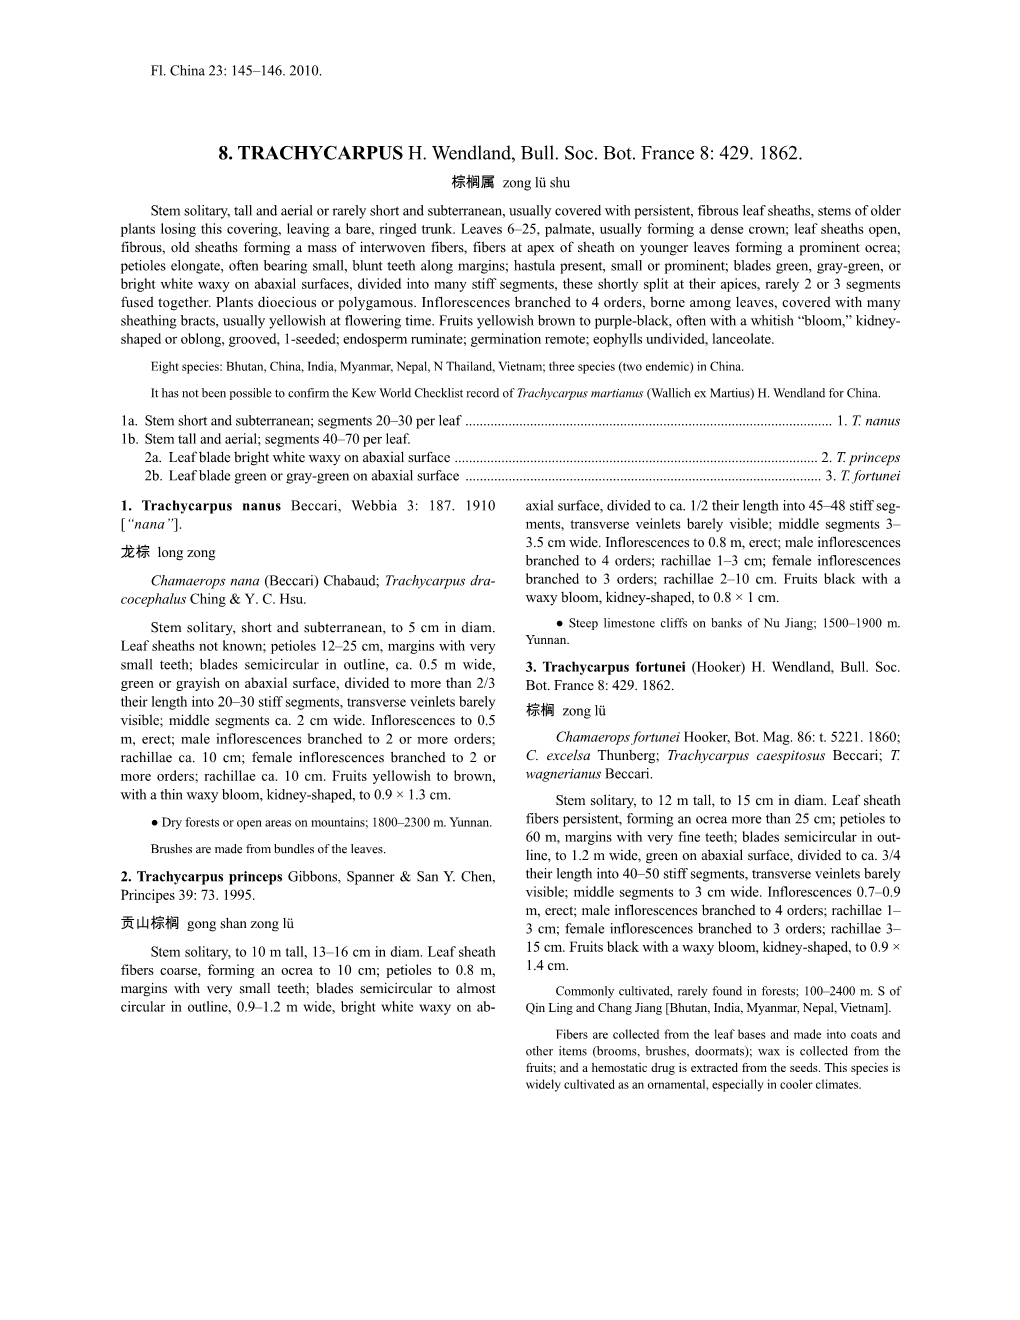 Trachycarpus (PDF)